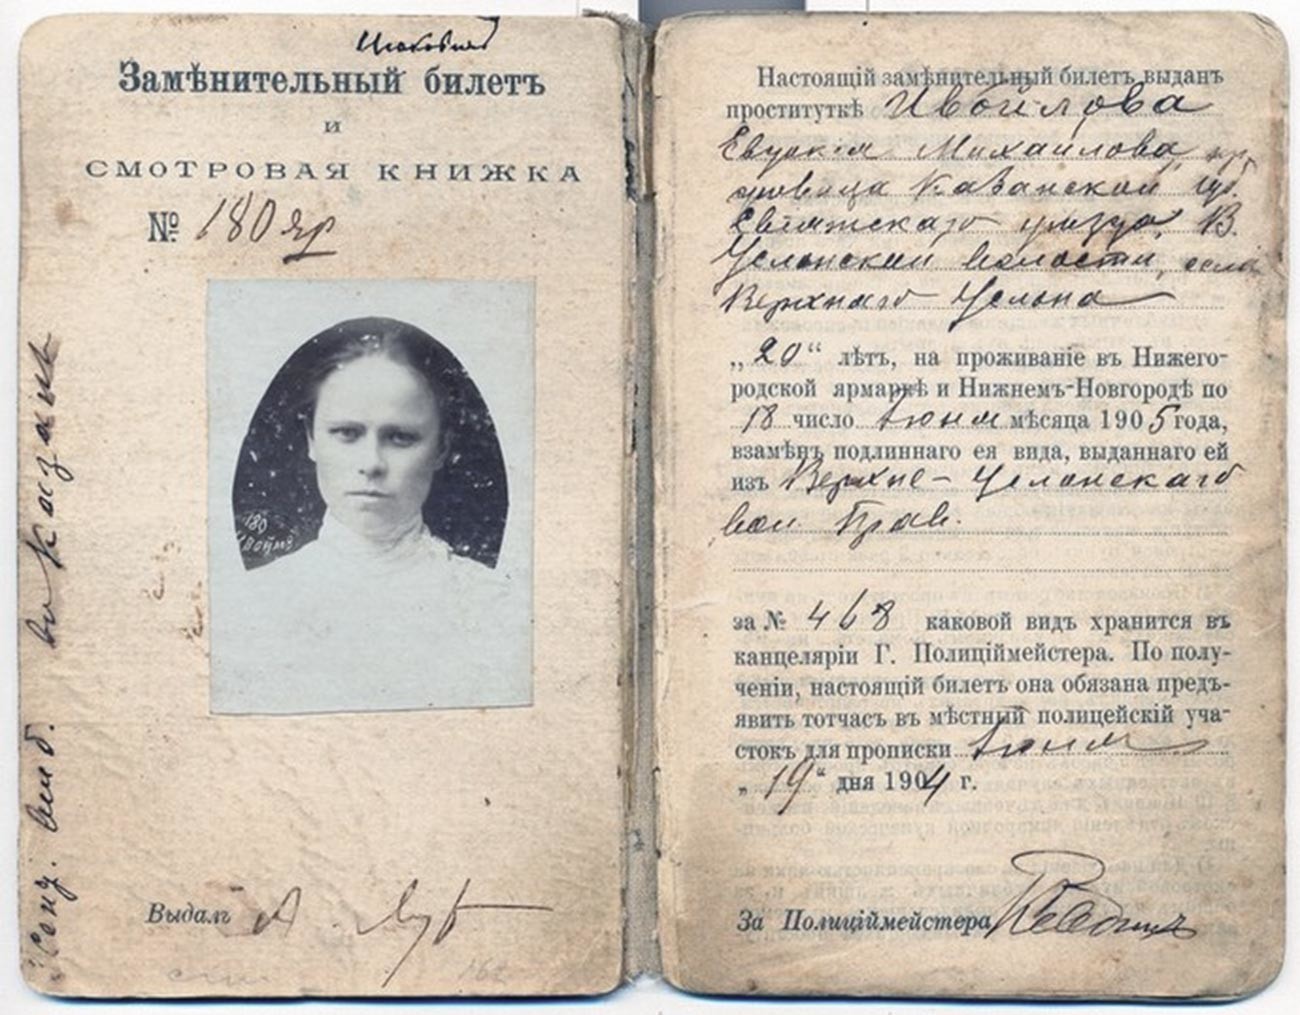 Certificat d'une prostituée de la foire de Nijni Novgorod 1904-1905